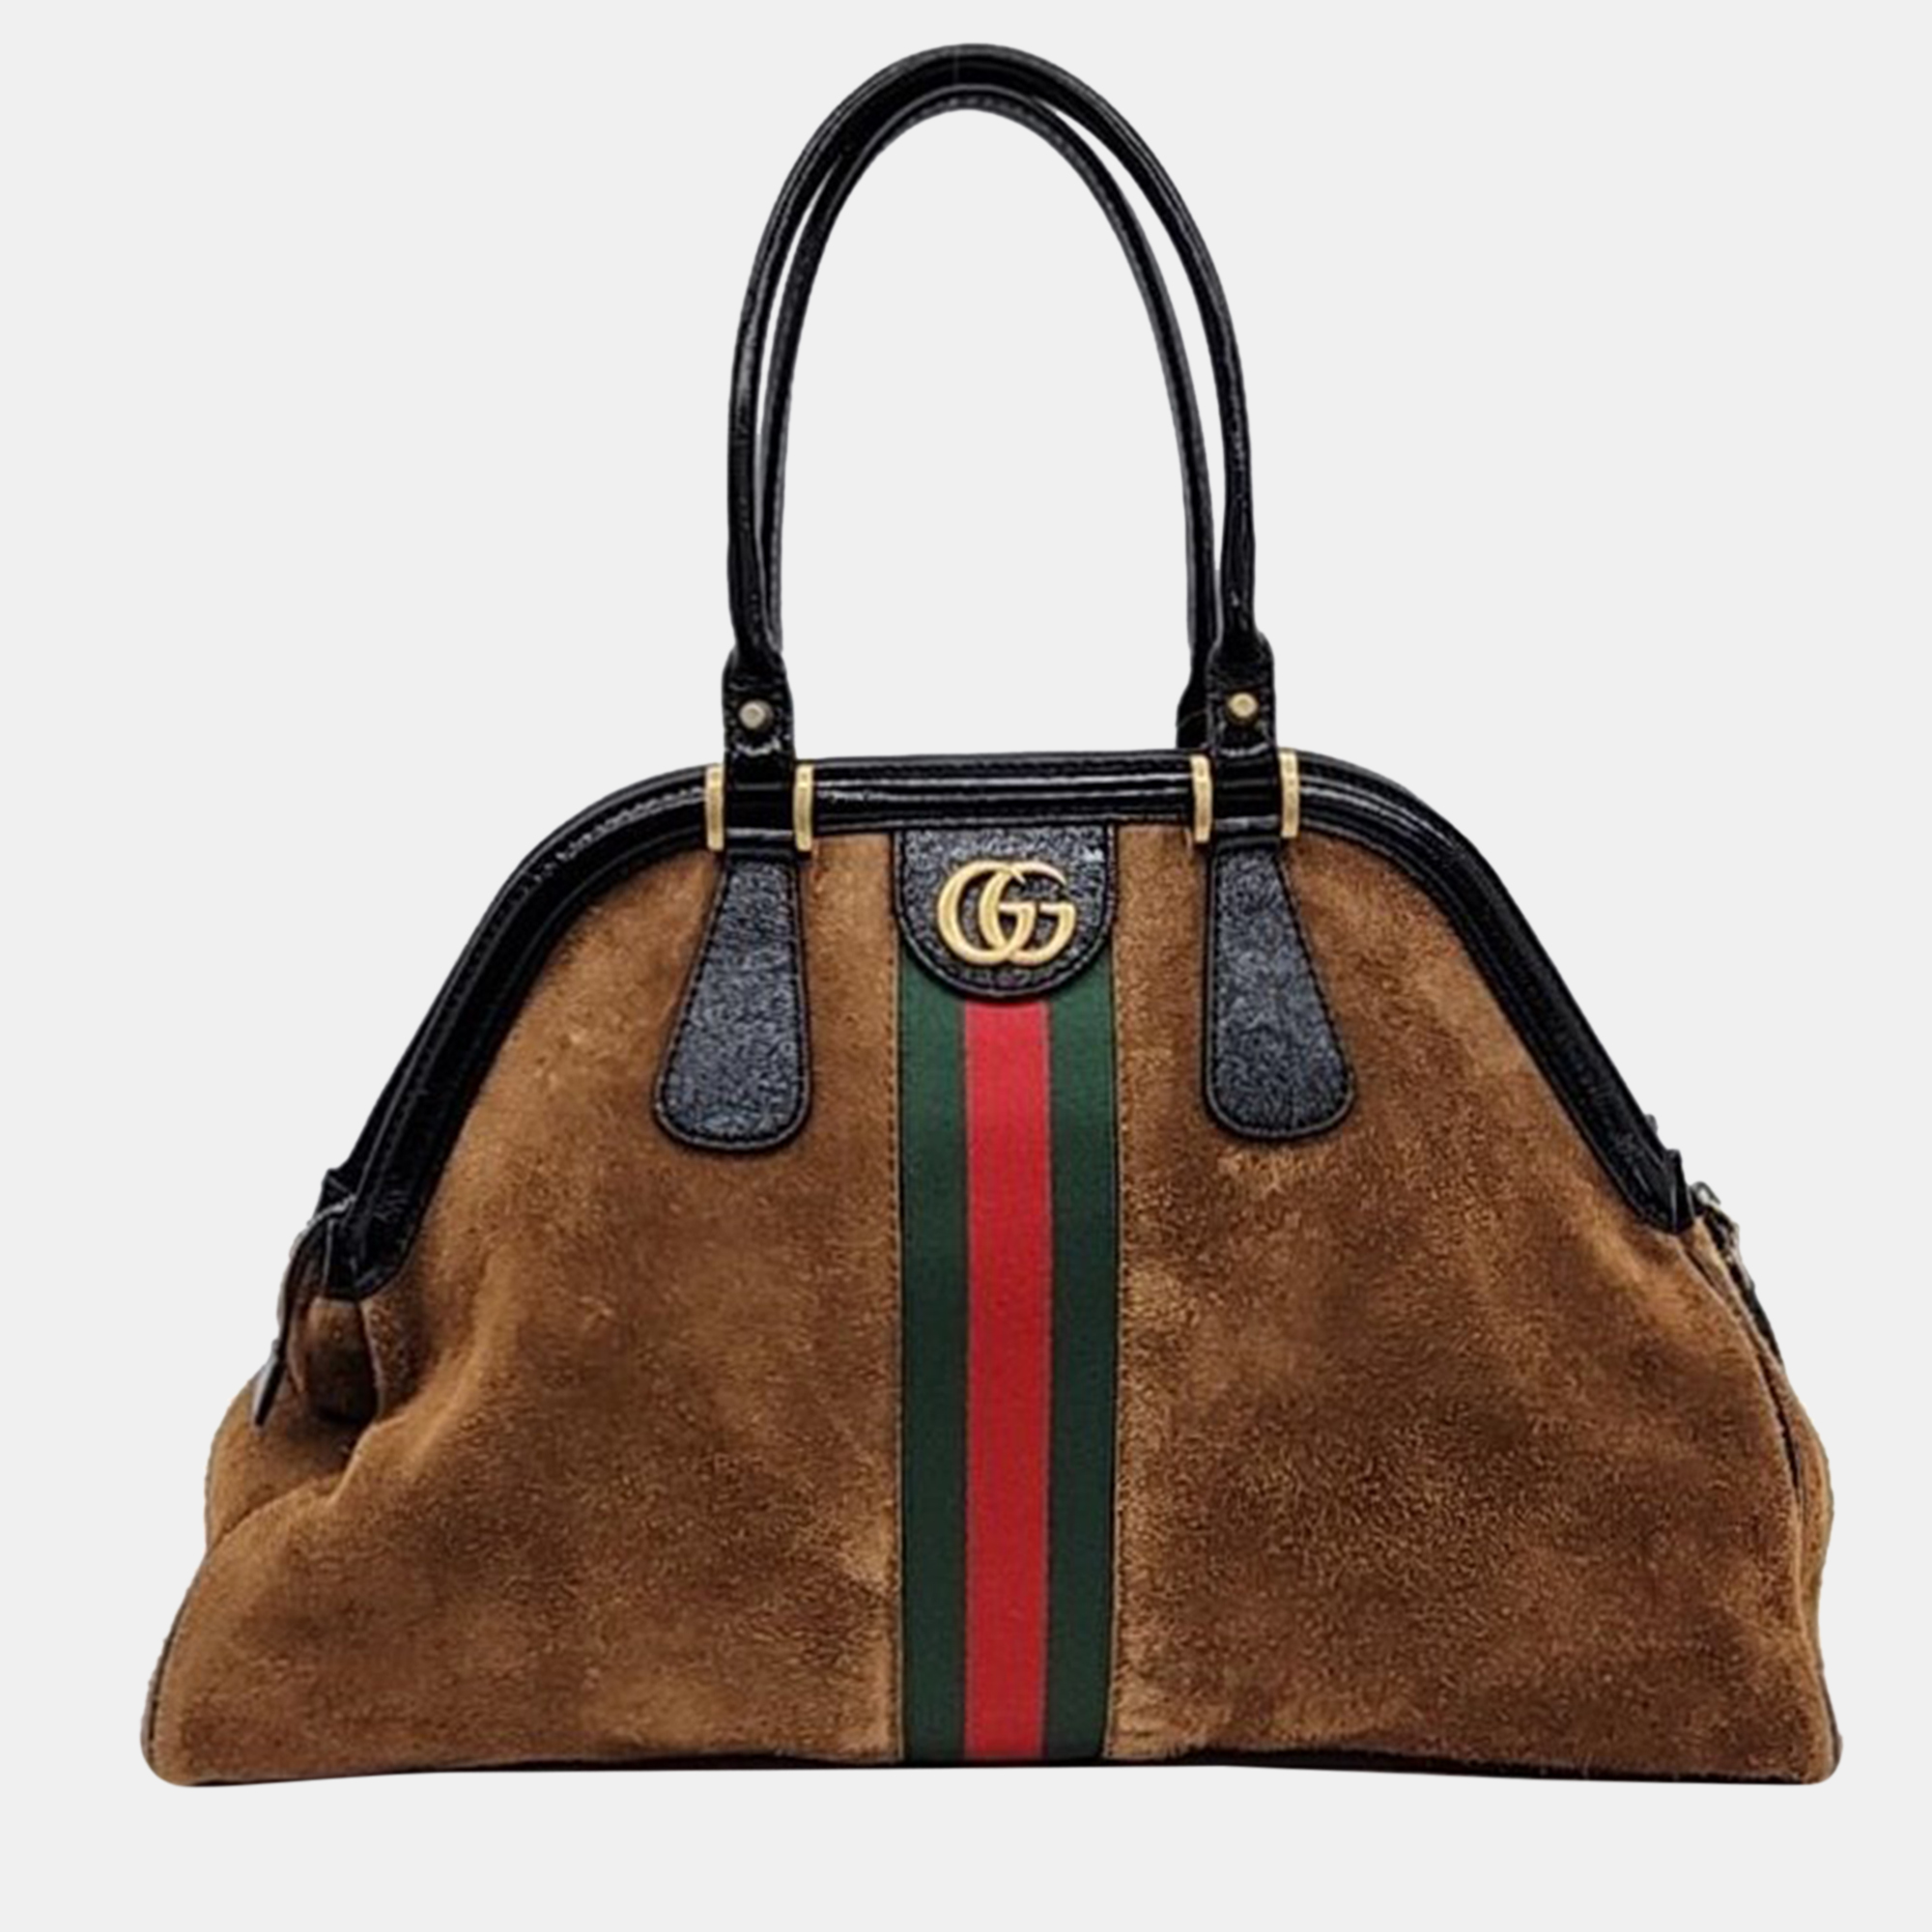 Gucci re(belle) large top handle bag